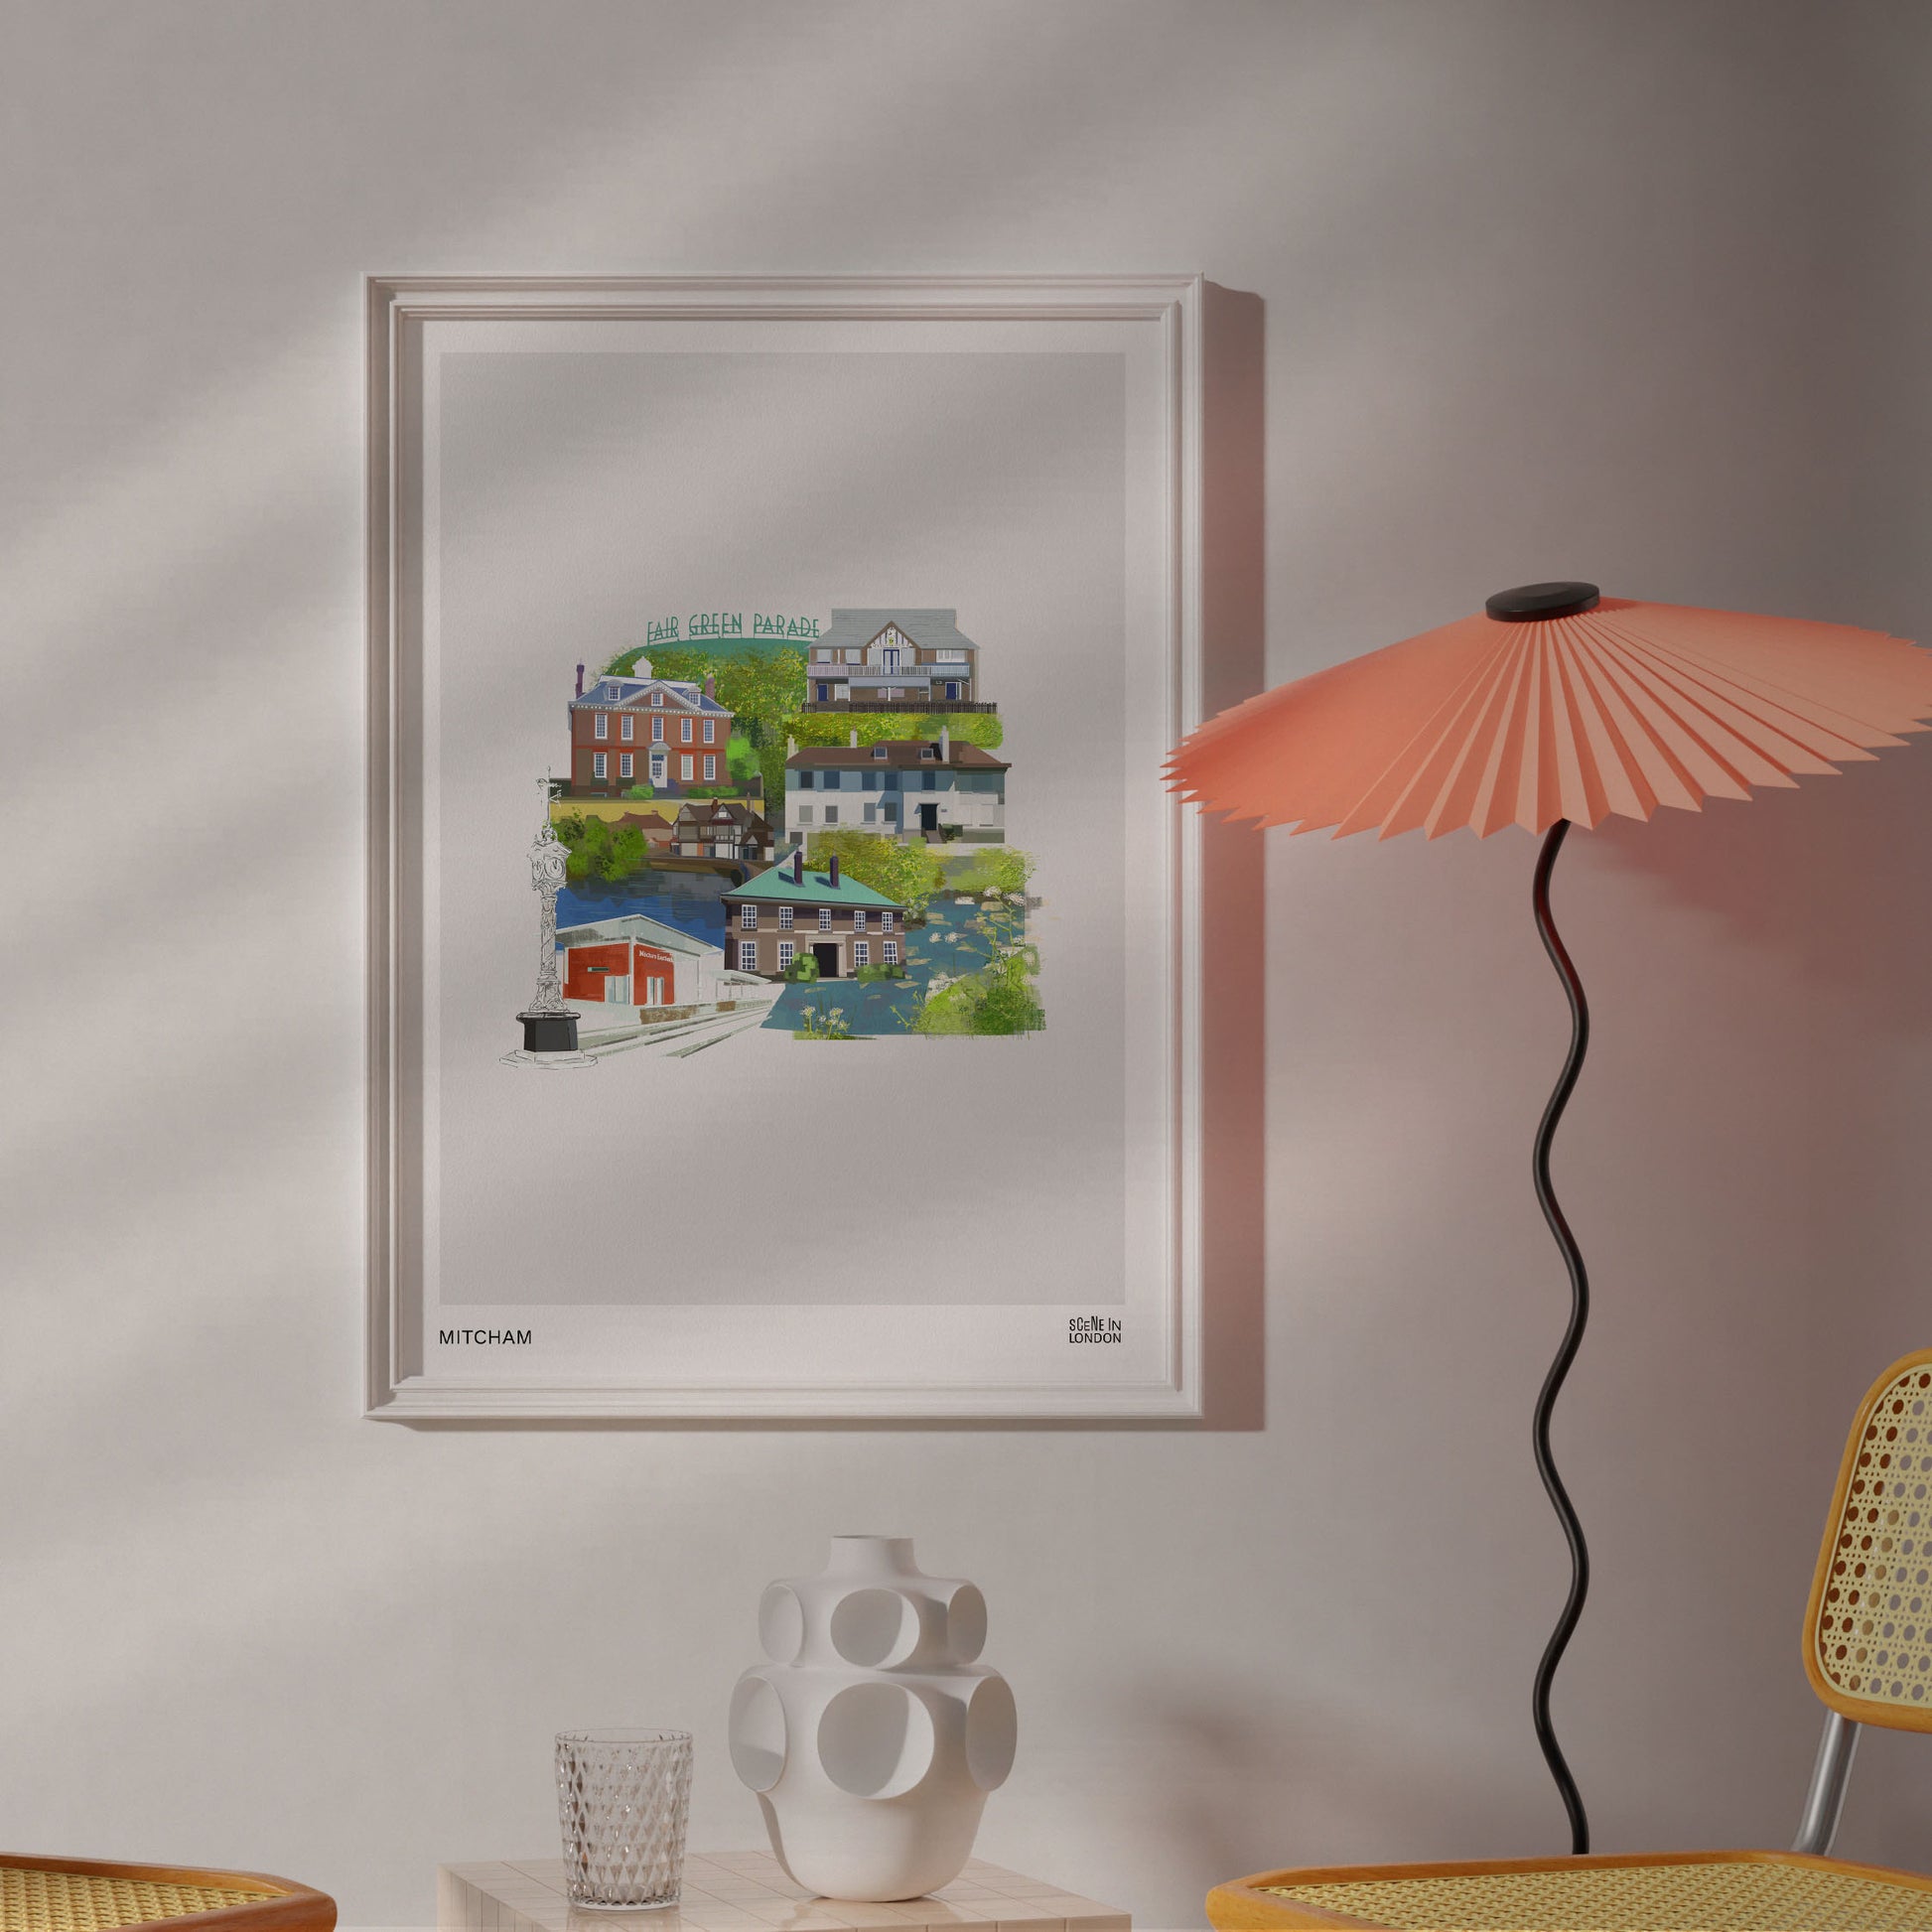 Mitcham print with illustrations of landmarks in Mitcham